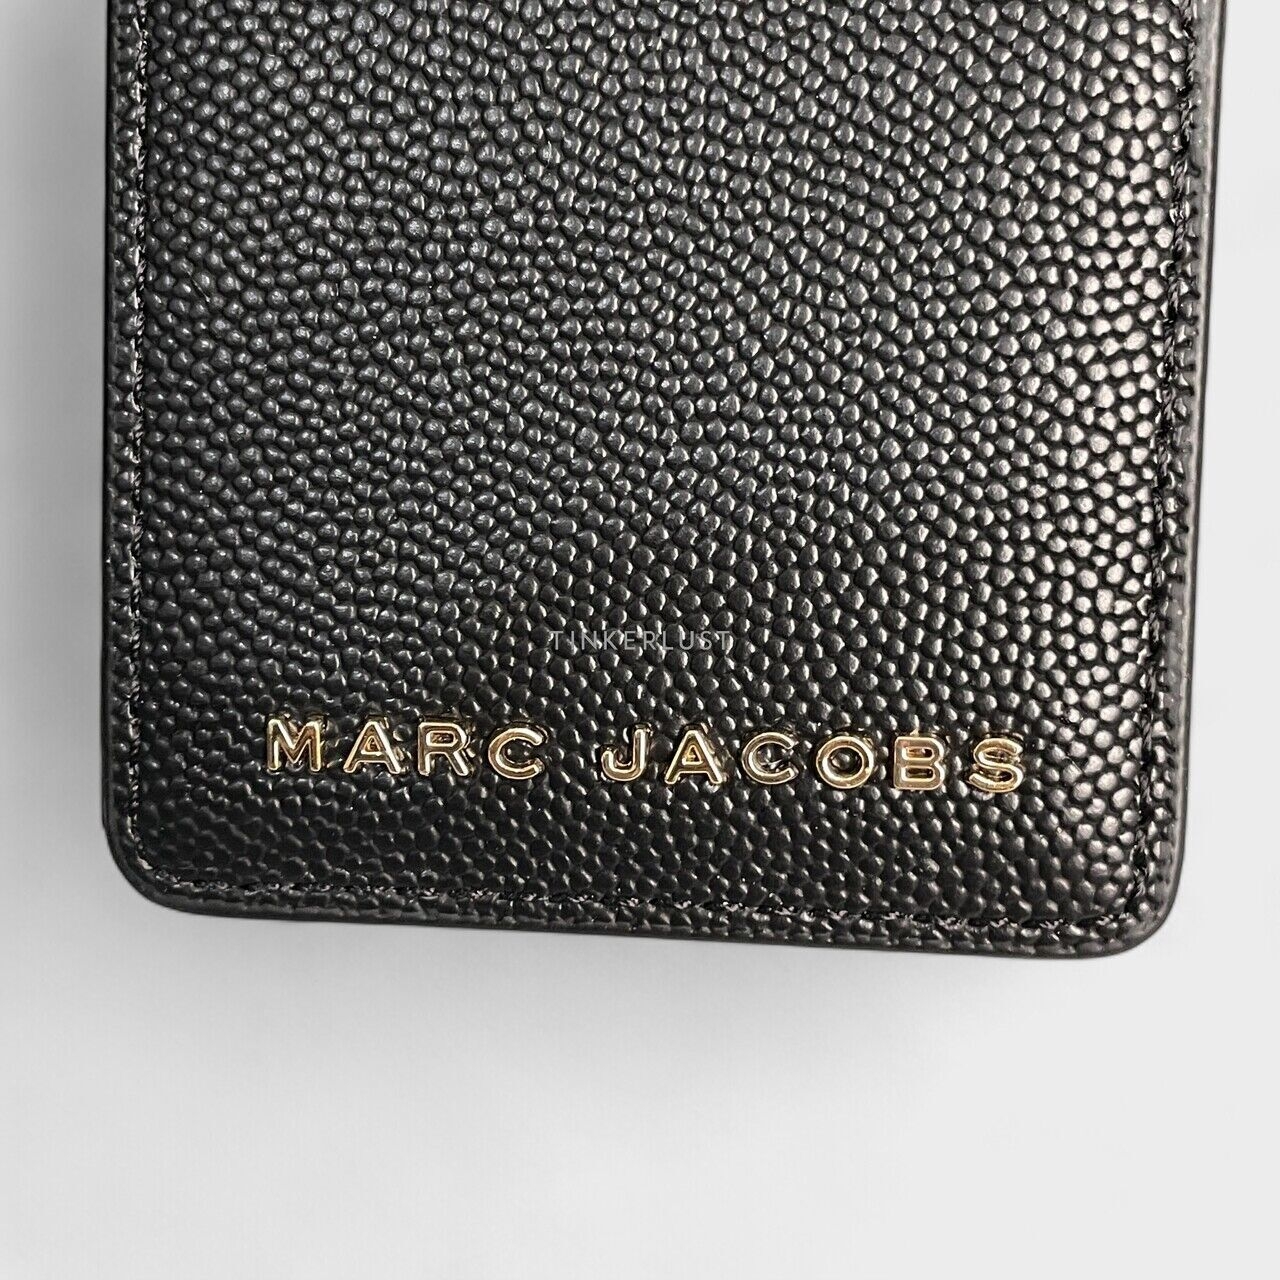 Marc Jacobs  M0016992-001 Black Leather Lanyard